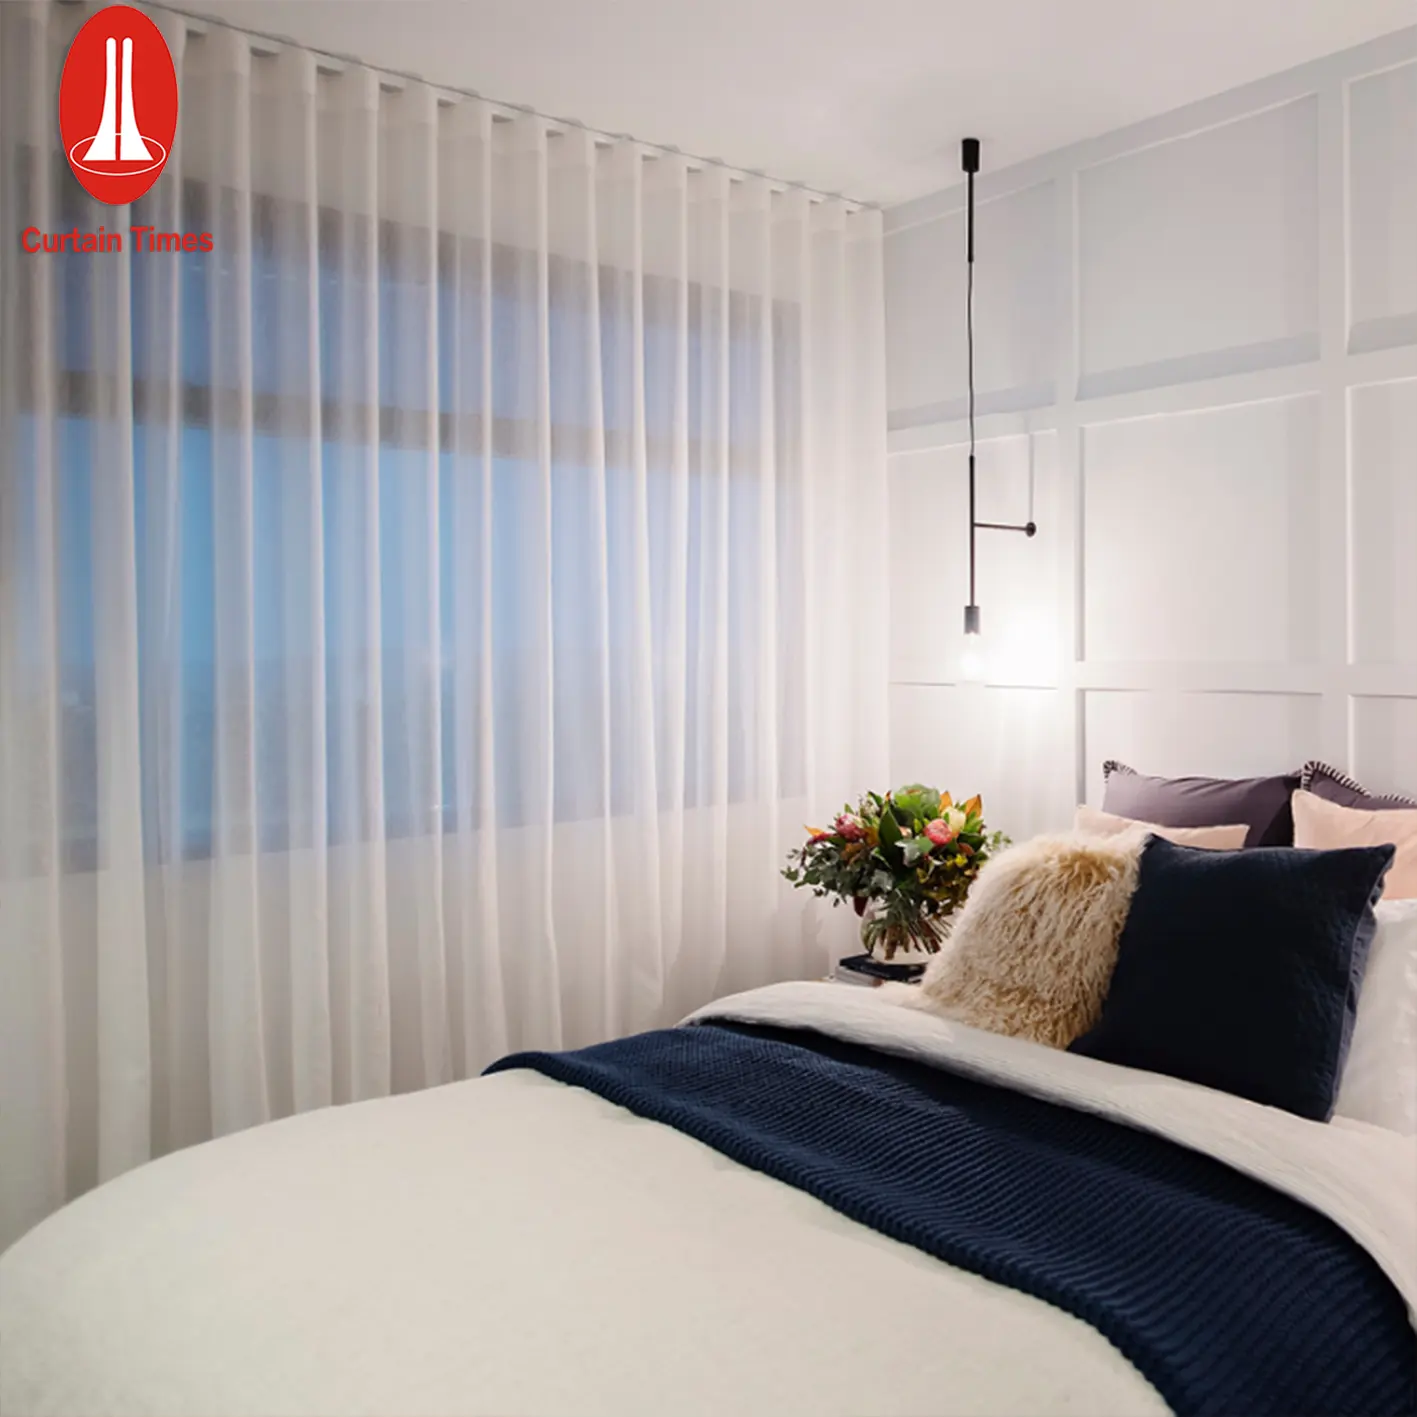 Curtain Times custom size fireproof fabric ripple fold hotel blackout sheer hotel drapes office window curtain